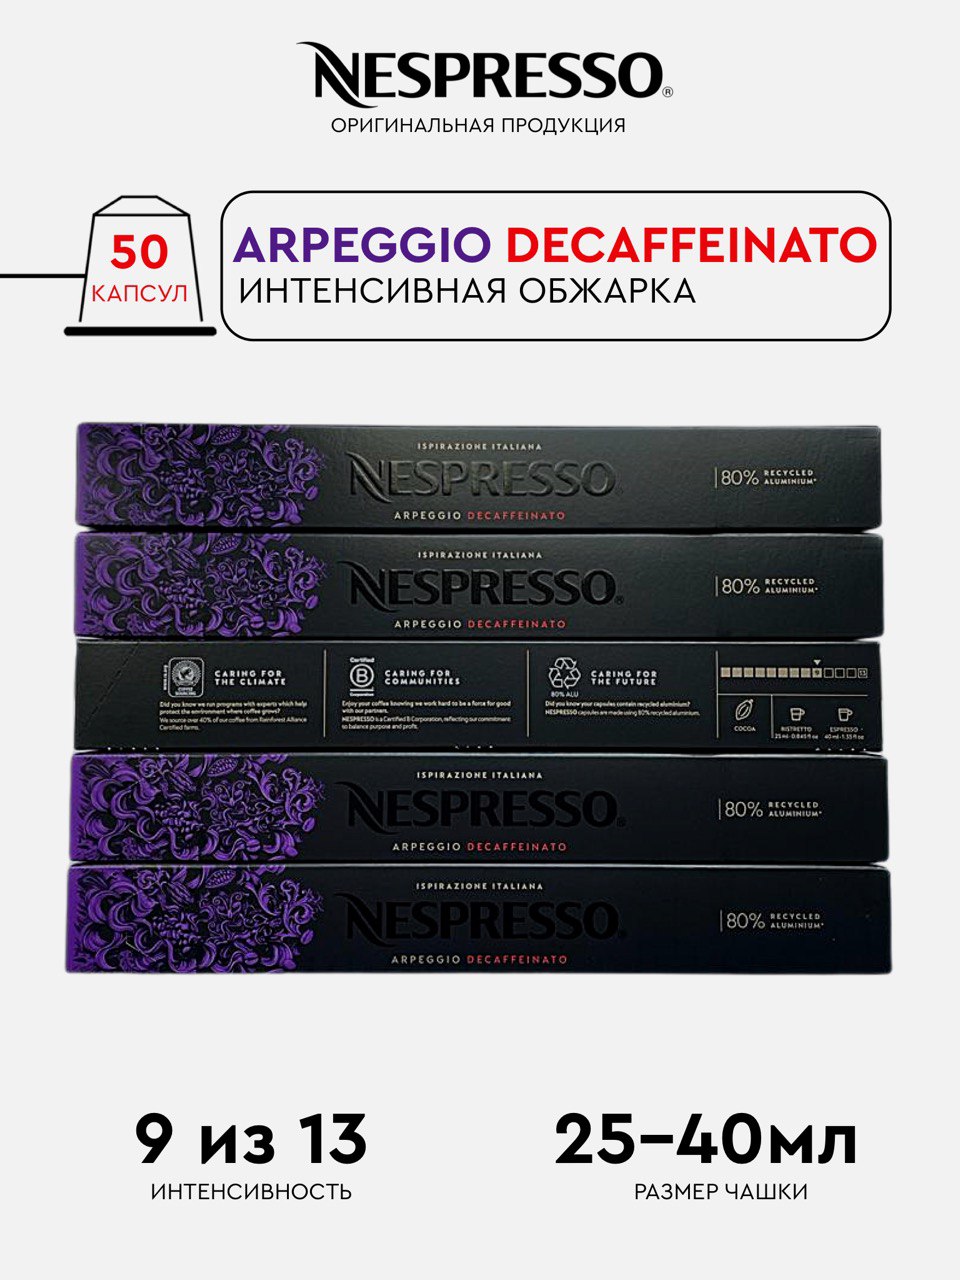 Кофе в капсулах Nespresso Arpeggio Decaffeinato для кофемашины Nespresso Original, 50 шт